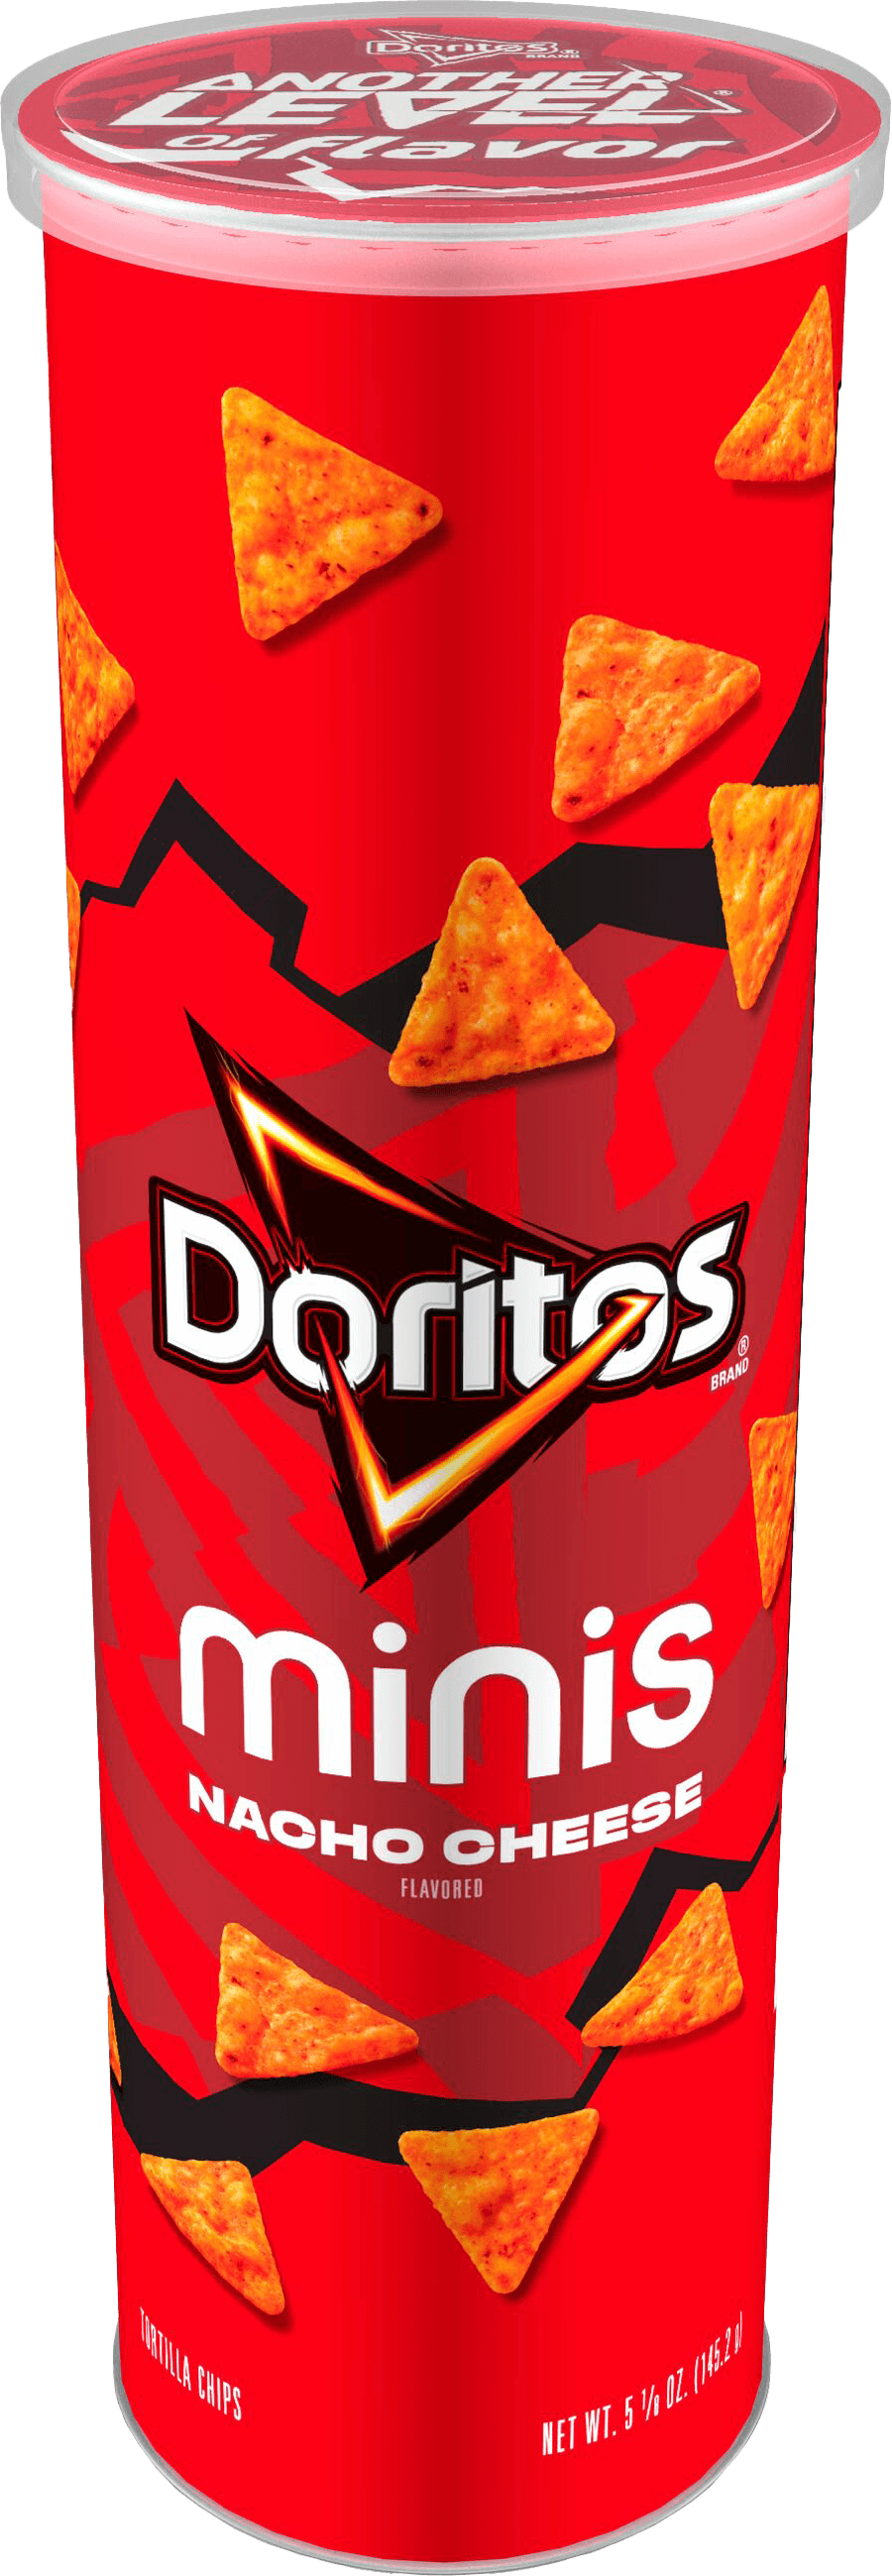 Doritos<sup>®</sup> Minis Nacho Cheese